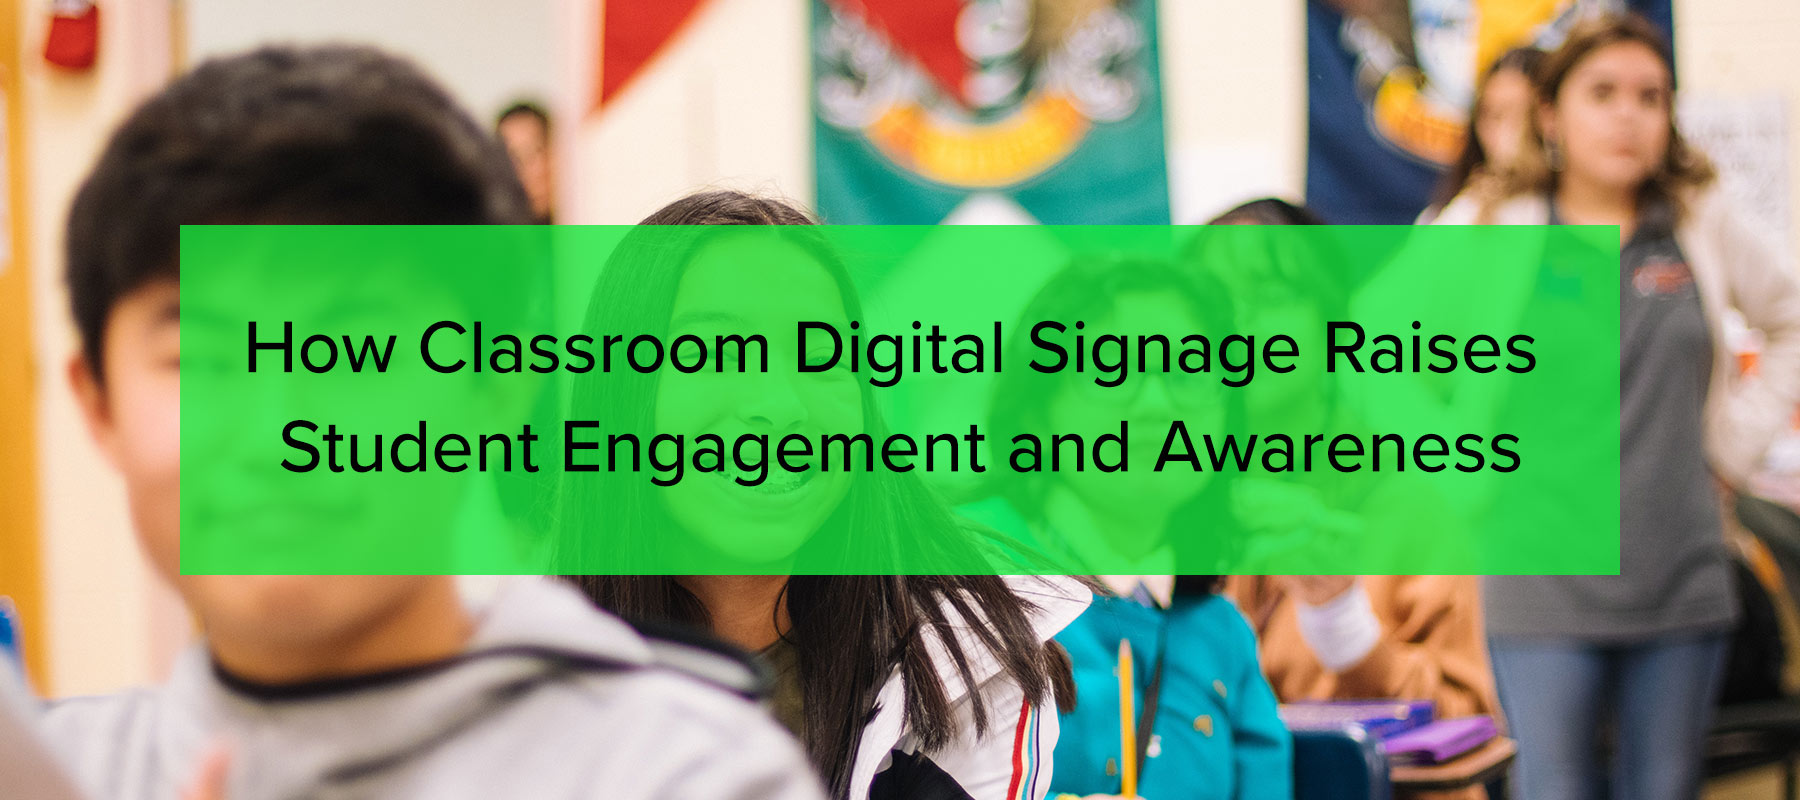 How Classroom Digital Signage Raises Student Engagement and Awareness